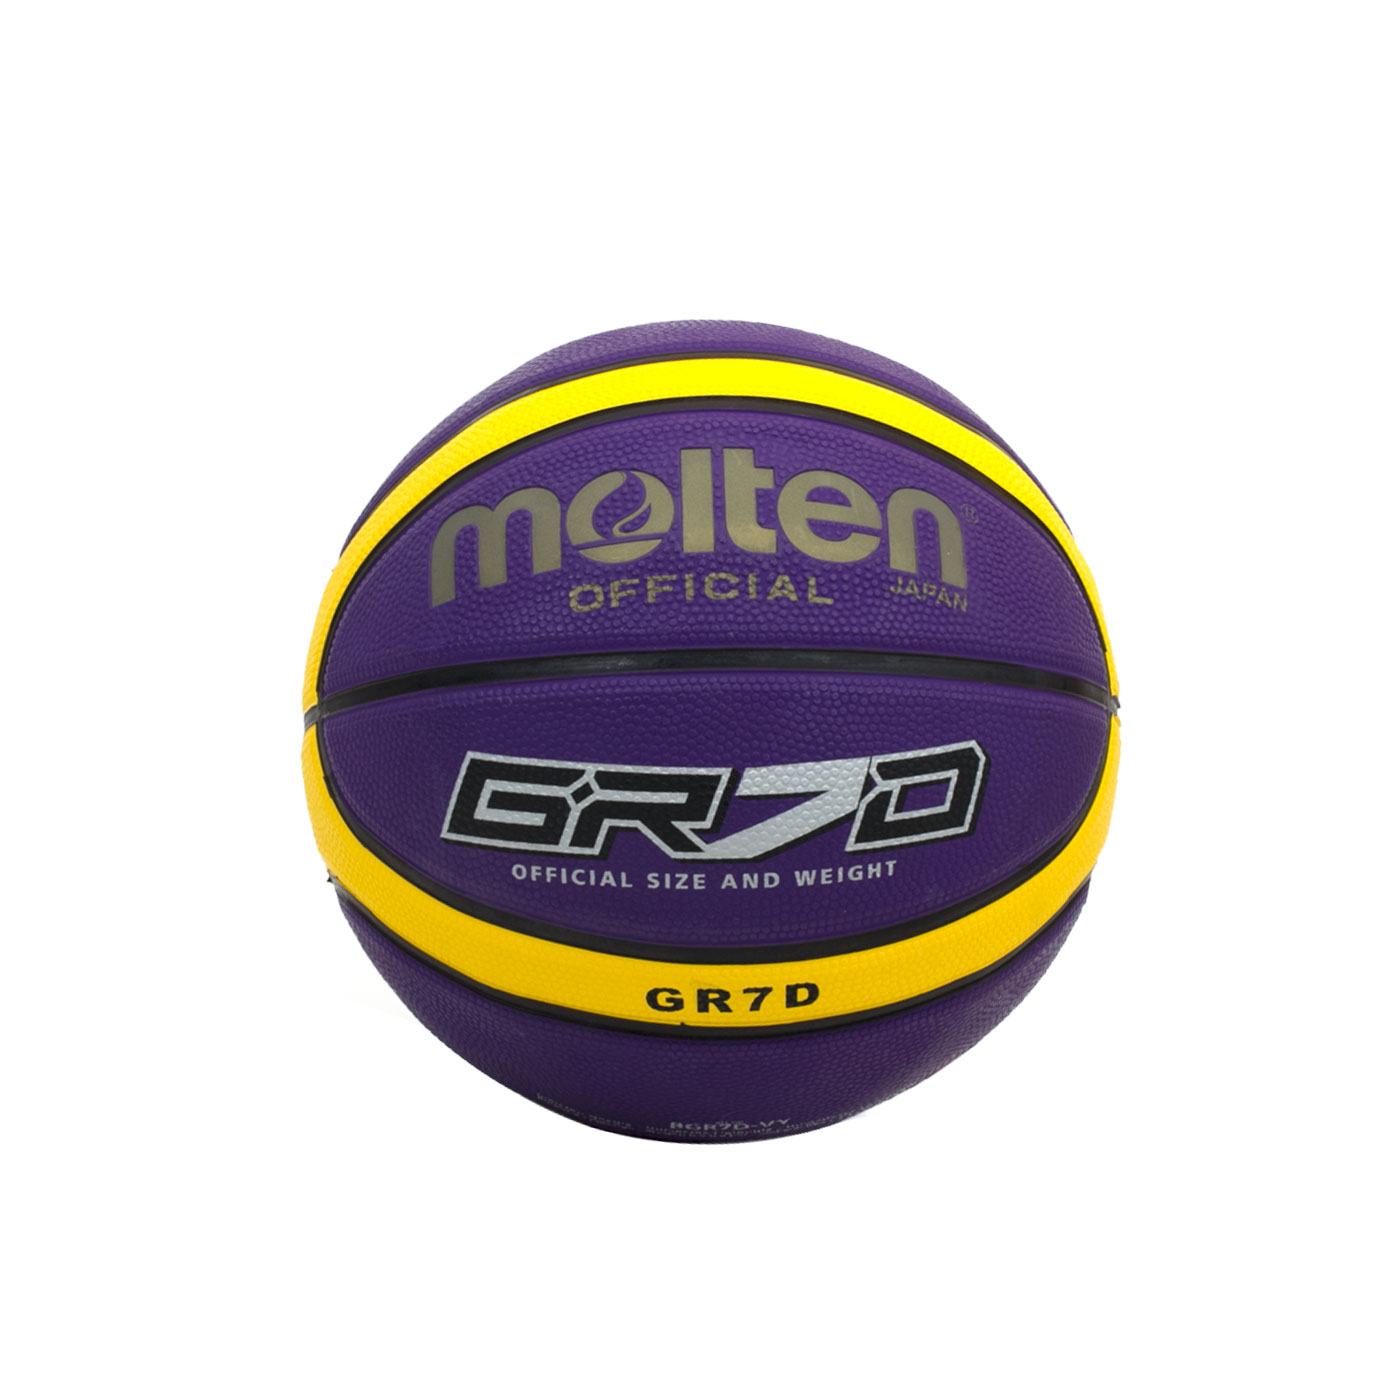 Molten 12片橡膠深溝籃球 BGR7D - 紫黃